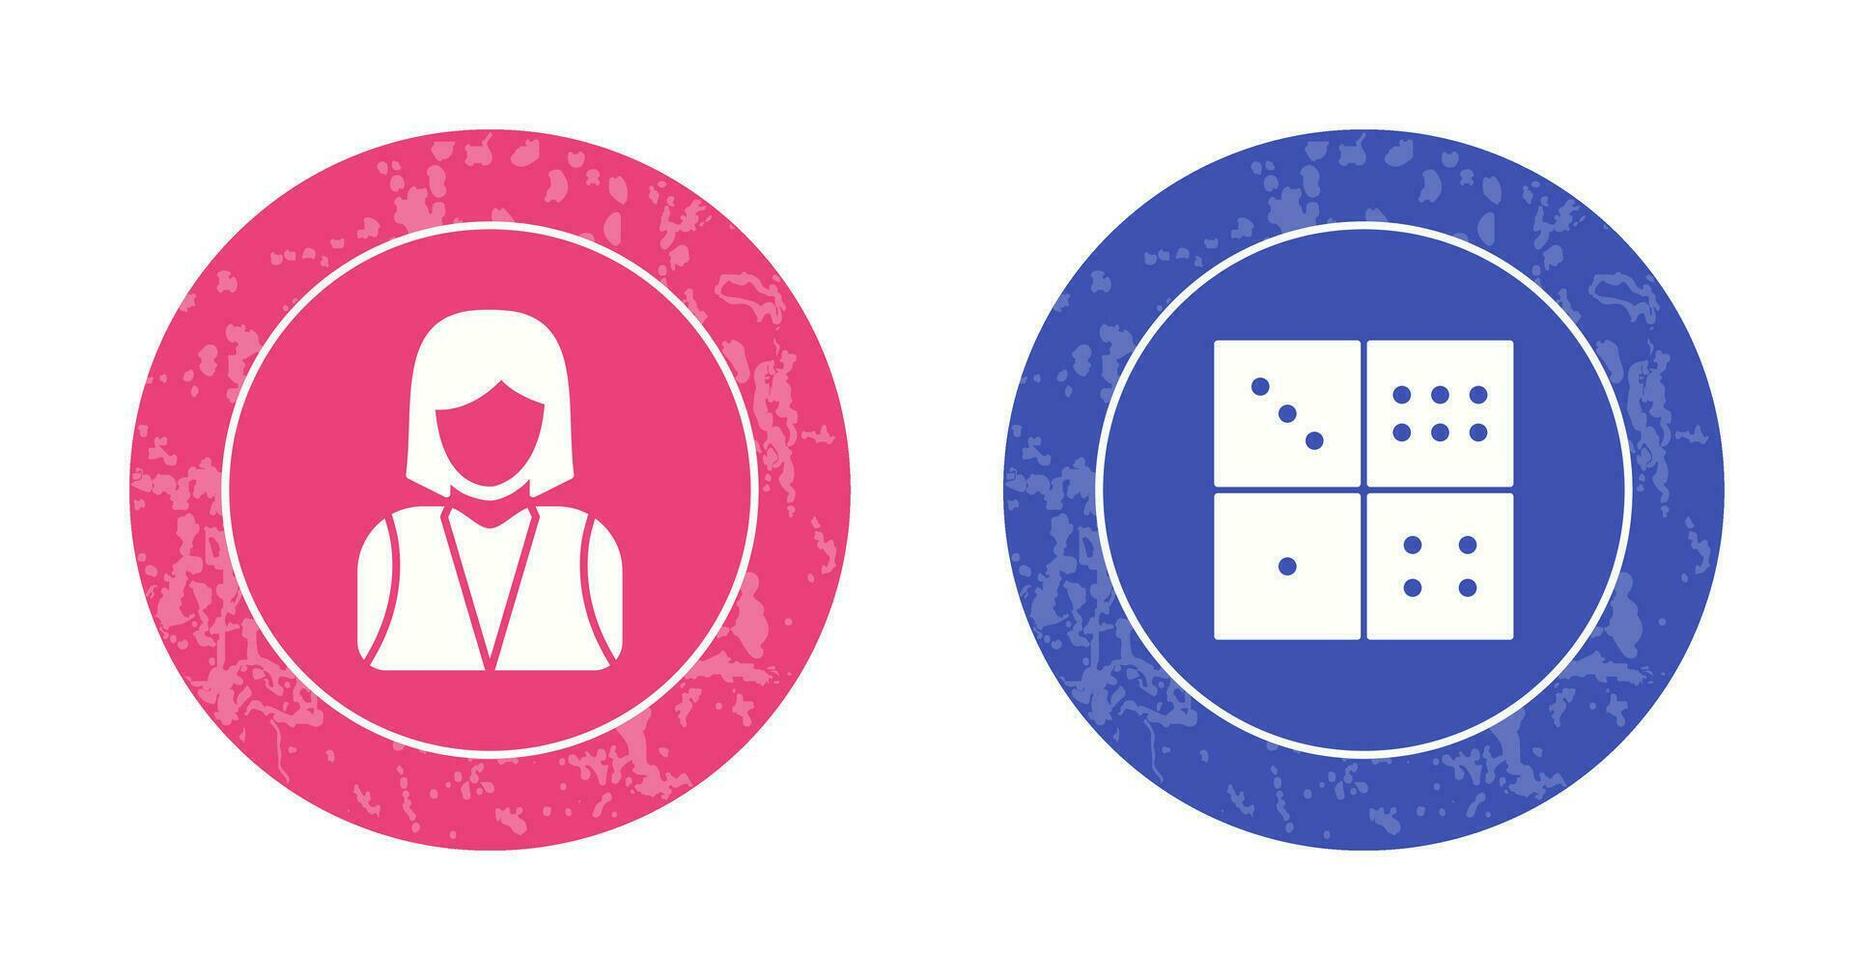 elegant Dame und Domino Spiel Symbol vektor